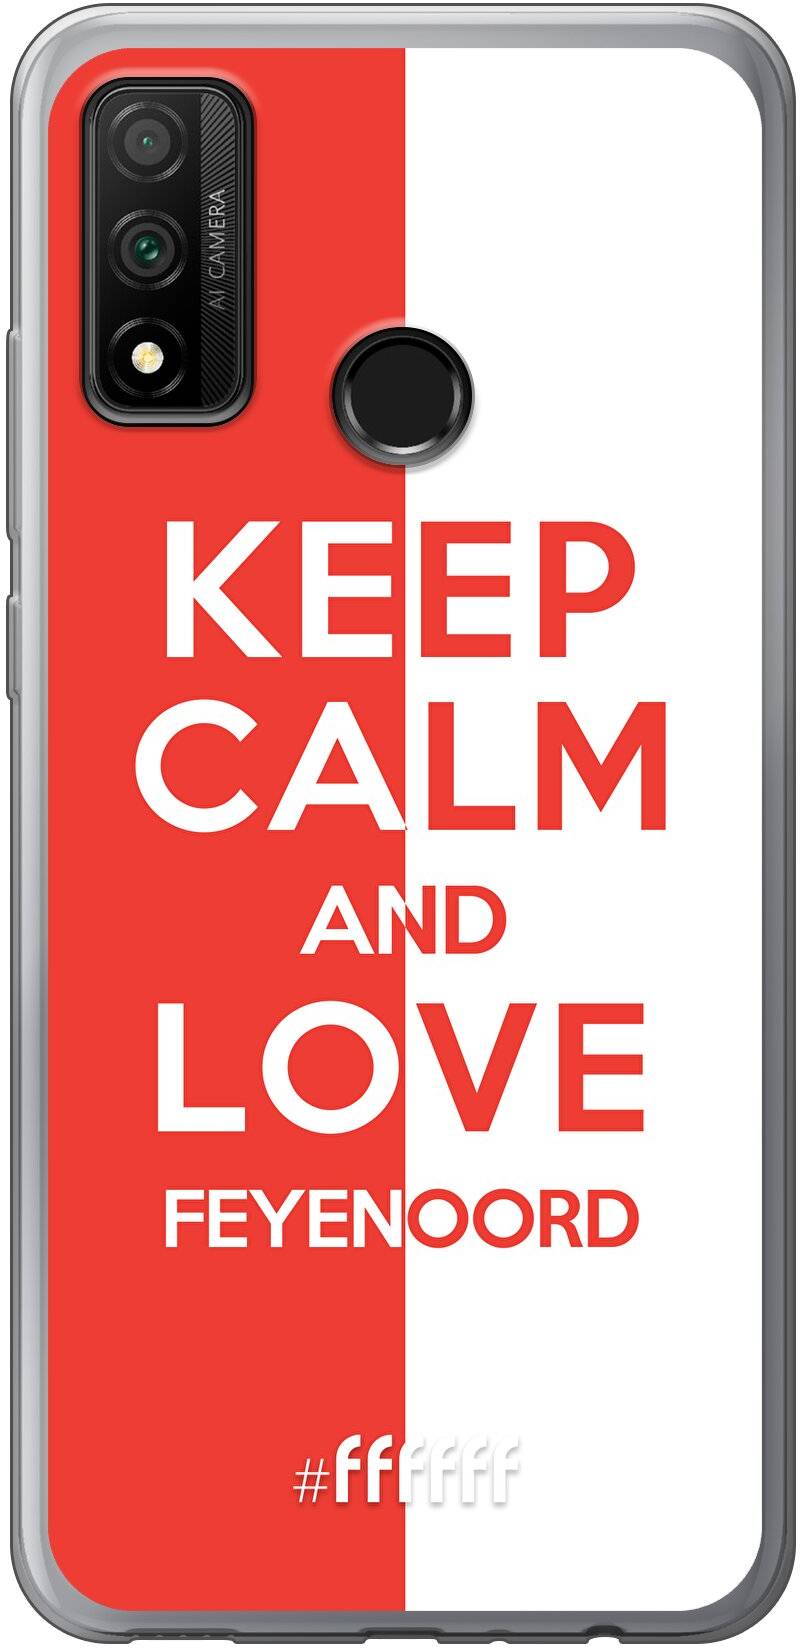 Feyenoord - Keep calm P Smart (2020)